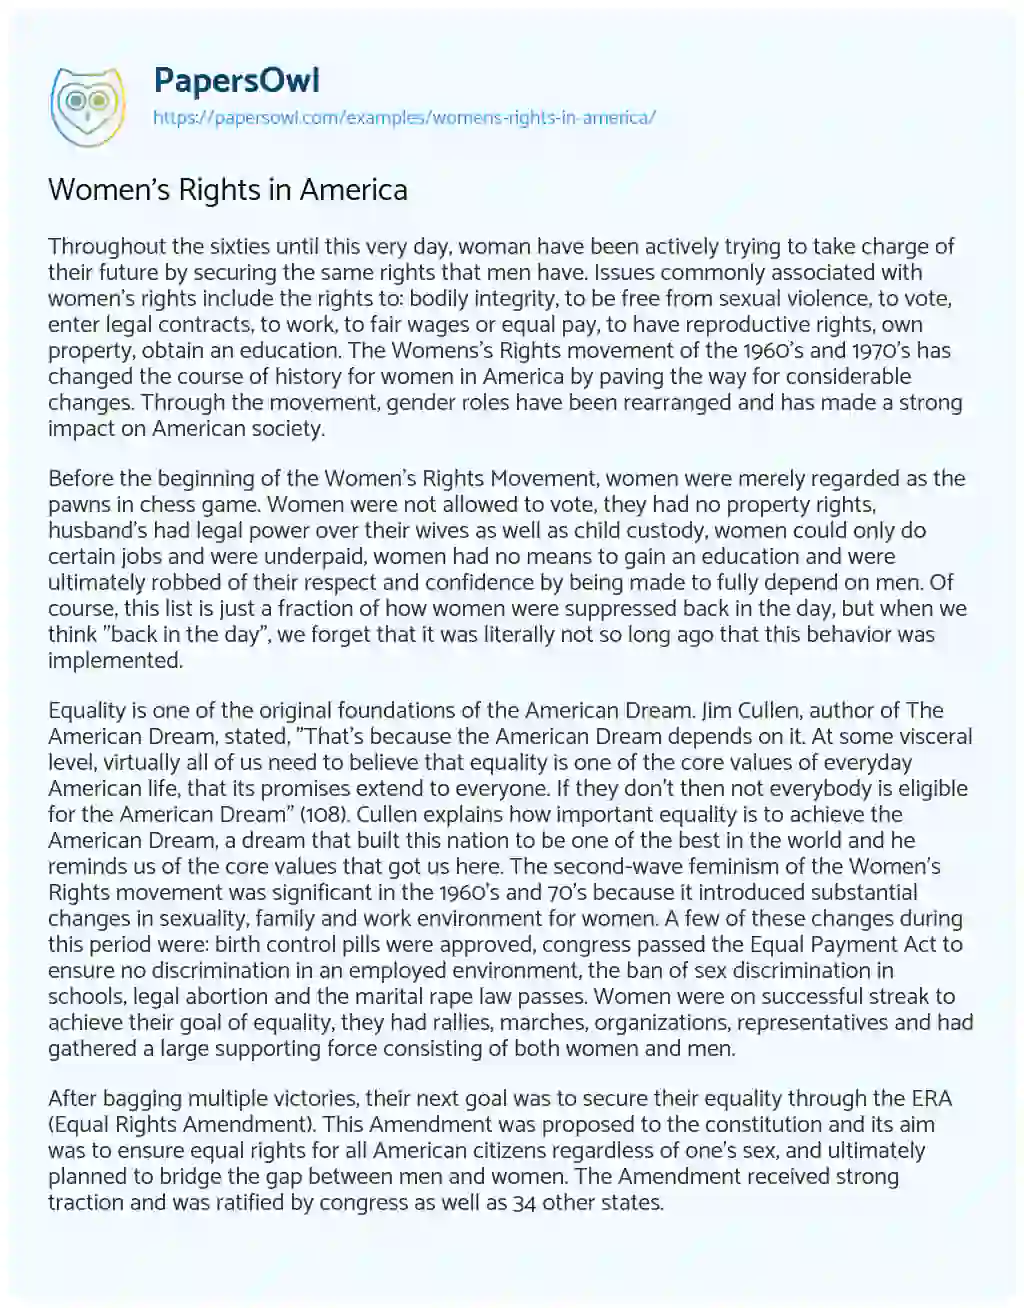 Women’s Rights in America essay